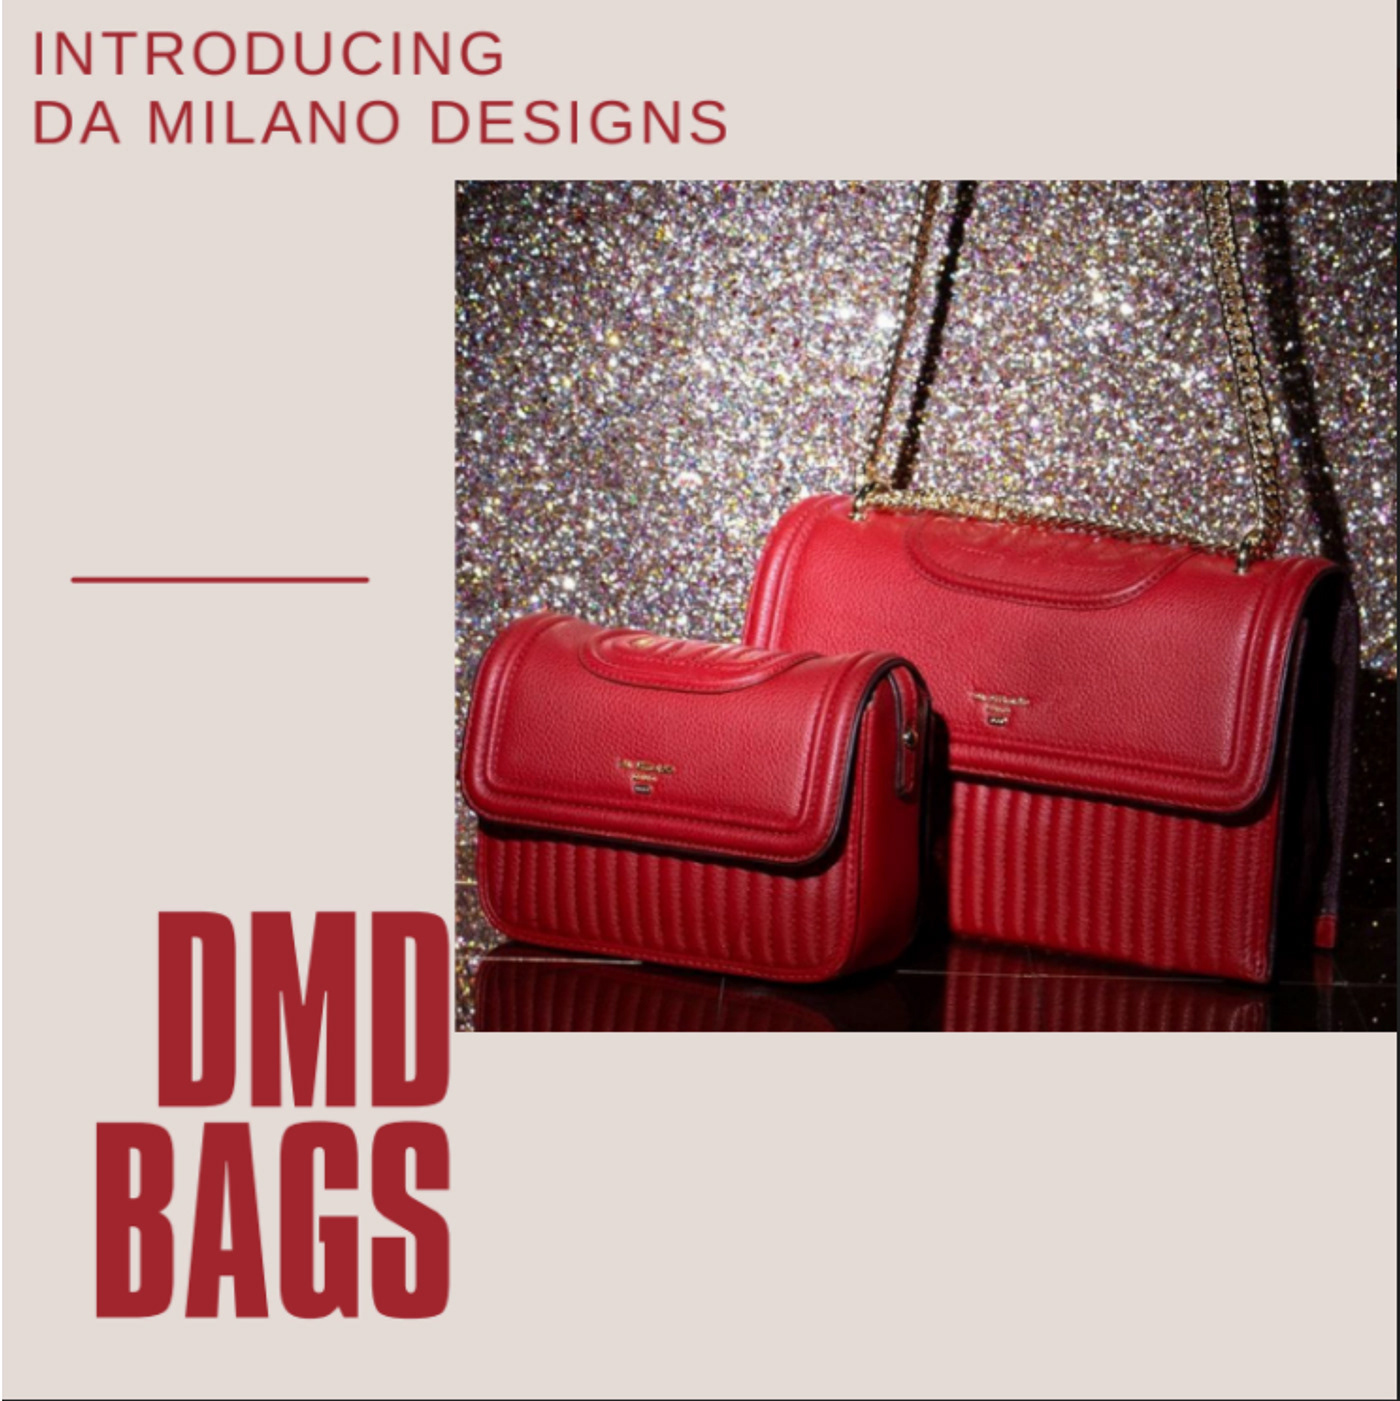 accessory design bags design design Handbag Design leather design